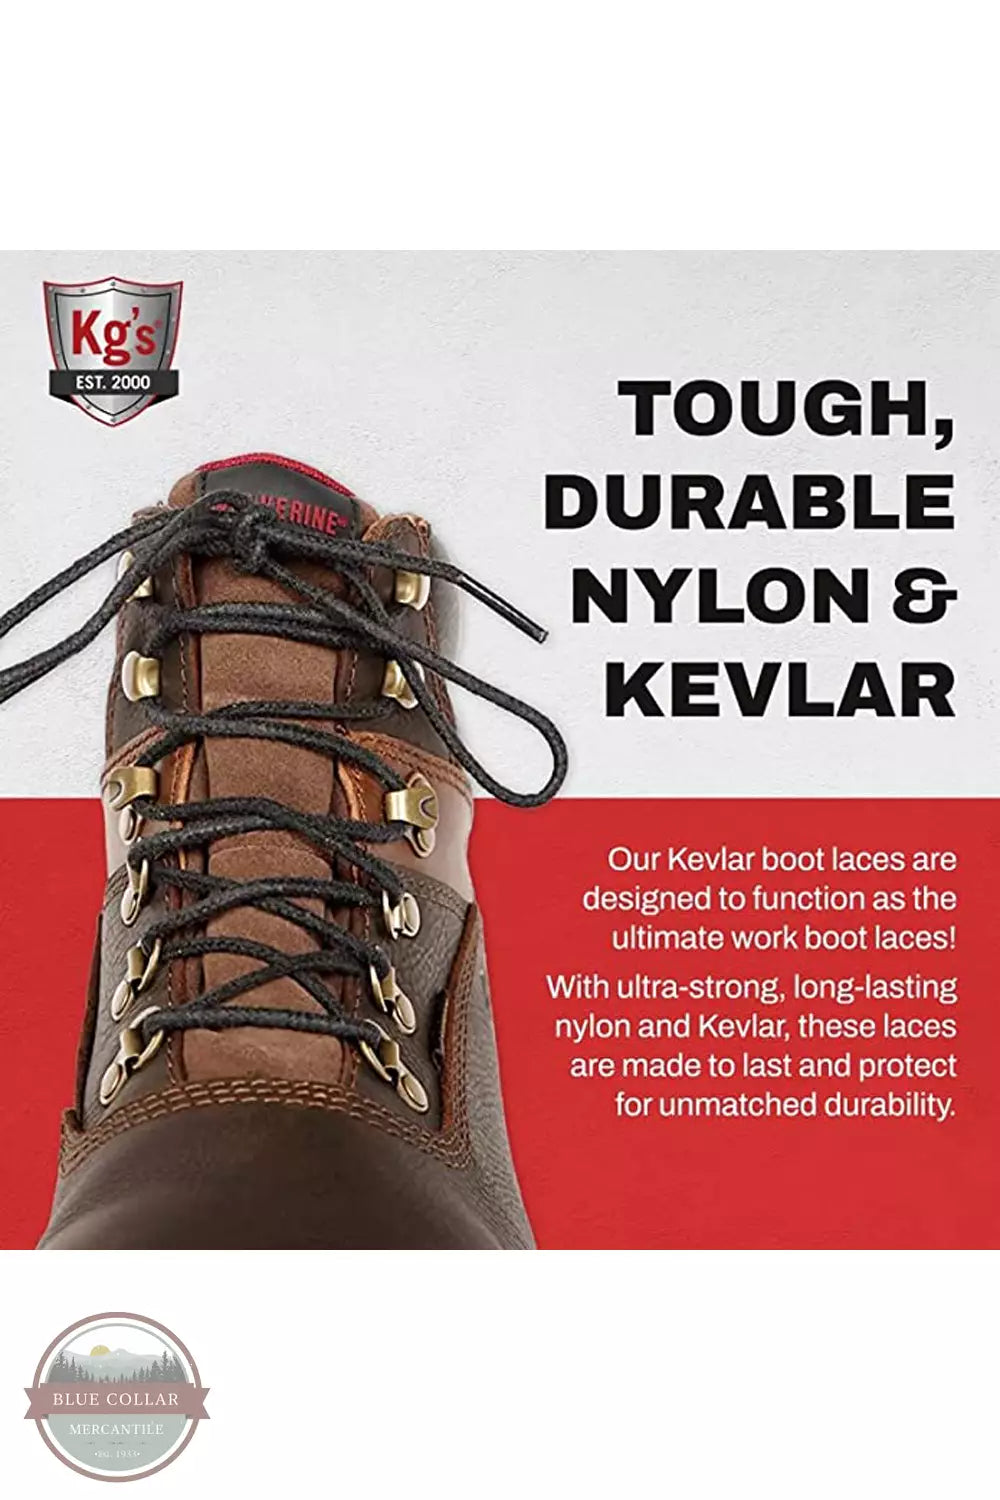 Kg's Boot Guard KG272 BLK KG-XTREME Kevlar Boot Laces in Black Tough, Durable Nylon adn Kevlar